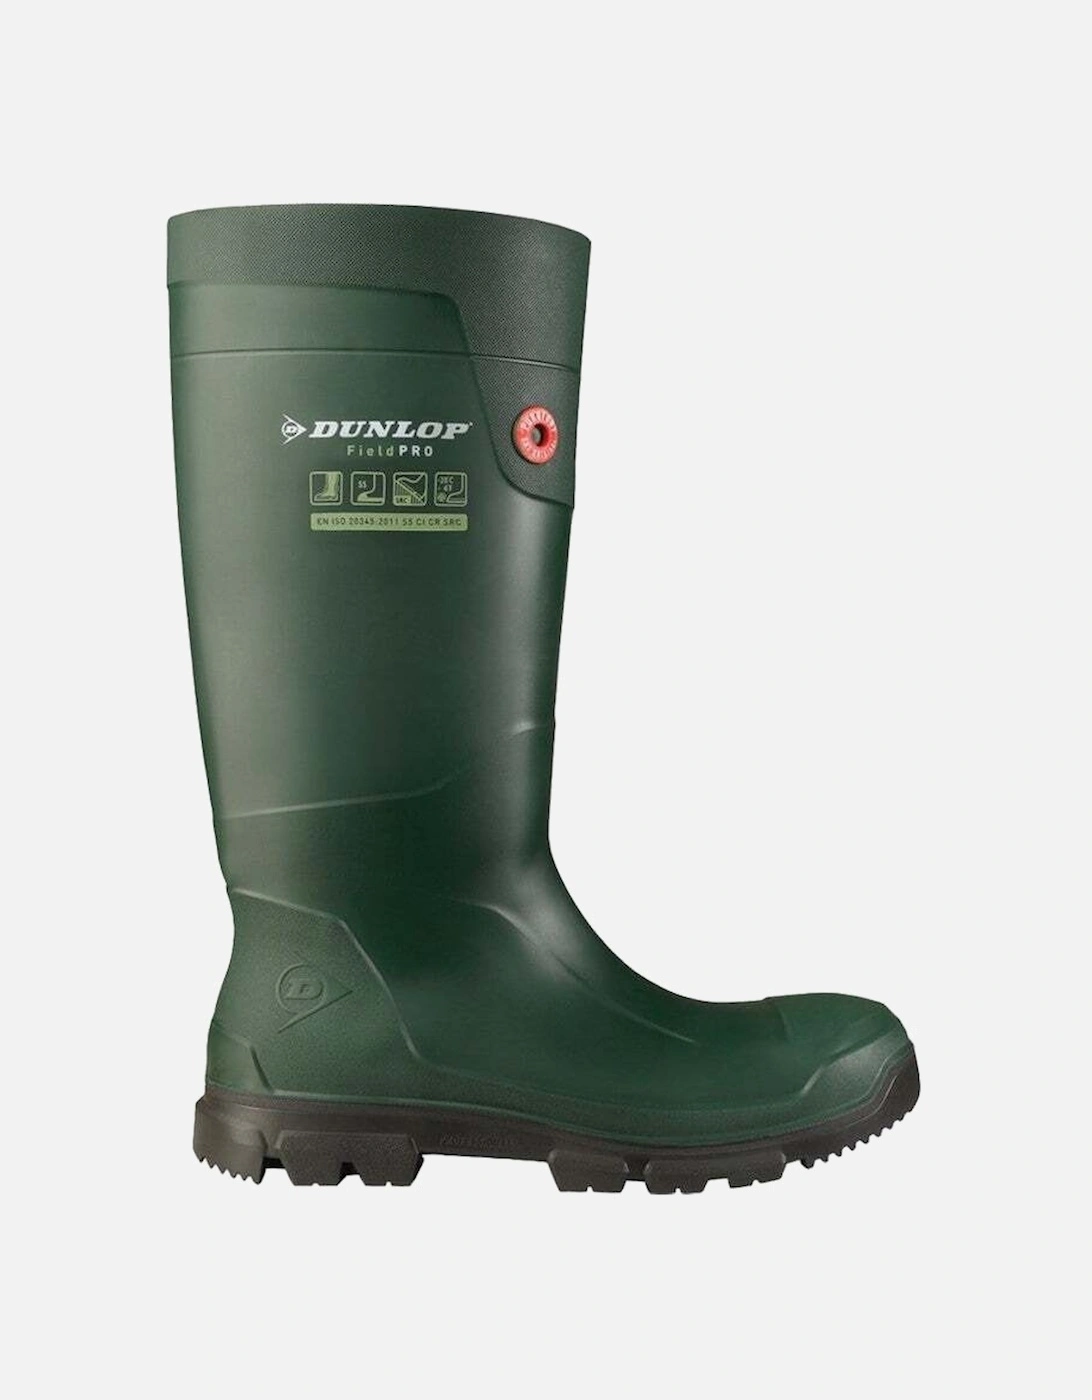 Unisex Adult FieldPro Full Safety Wellington Boots